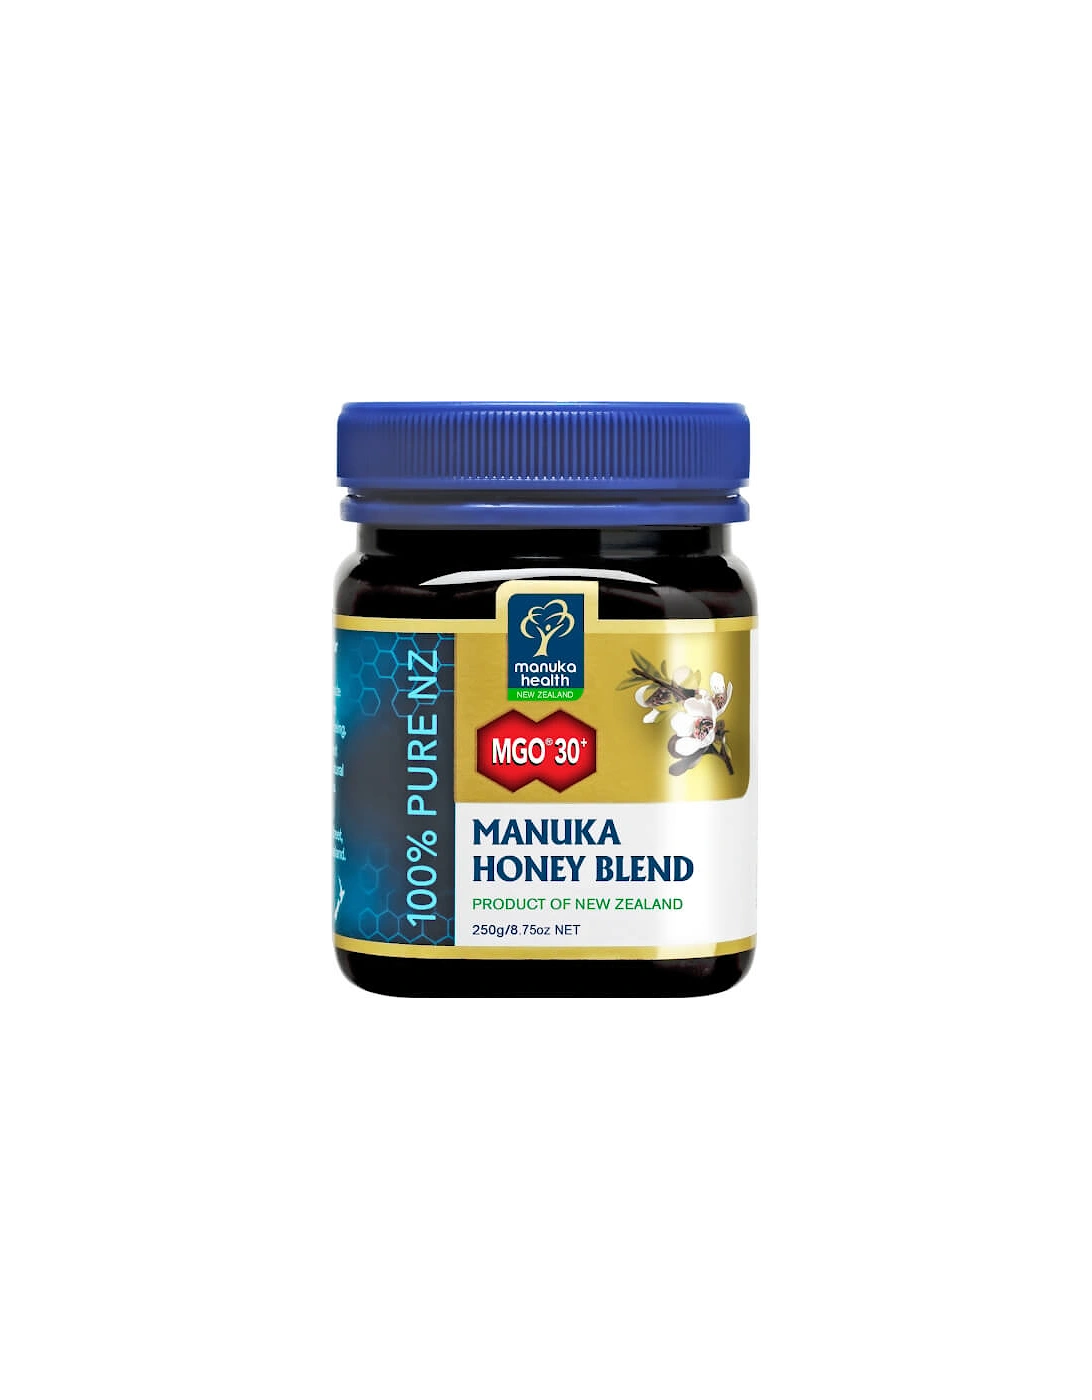 Health MGO 30+ Honey Blend Family Jar 1kg - Health New Zealand Ltd - Health MGO 30+ Honey Blend 250g - Health MGO 30+ Honey Blend 500g - Health MGO 30+ Honey Blend Family Jar 1kg, 2 of 1